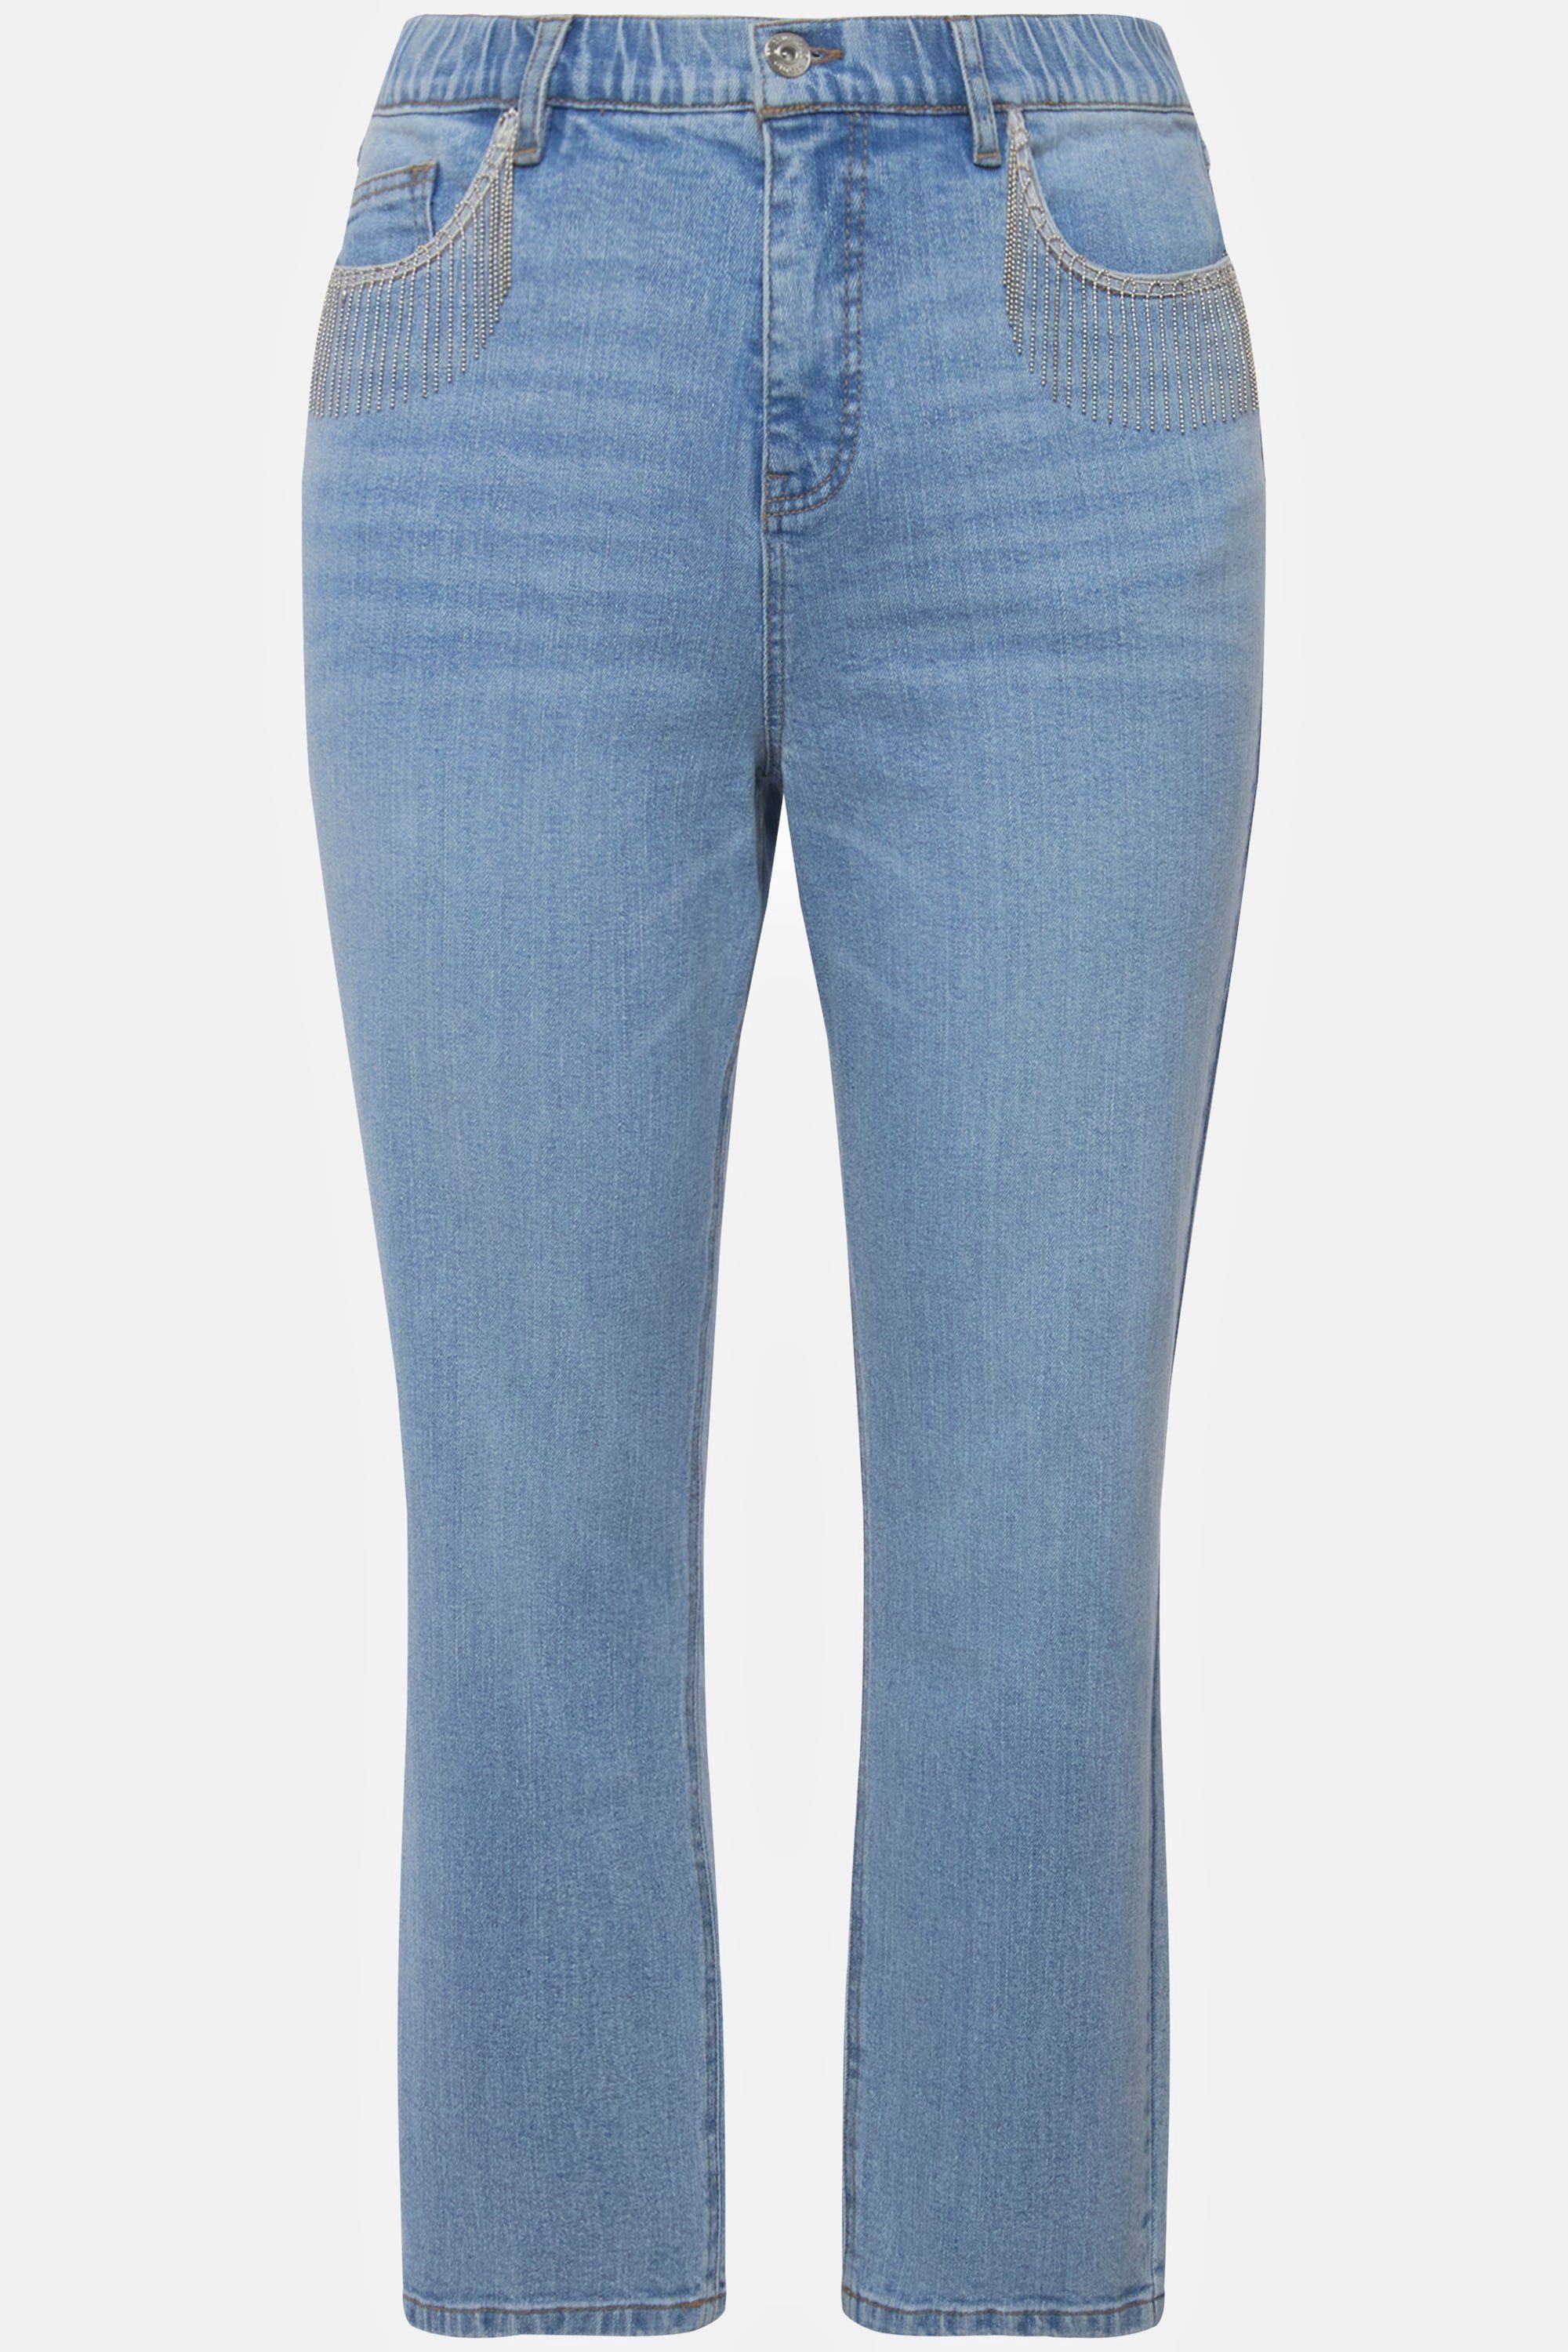 Wide 5-Pocket mit Legs Untold Kettenbändern Funktionshose Studio Mom-Jeans